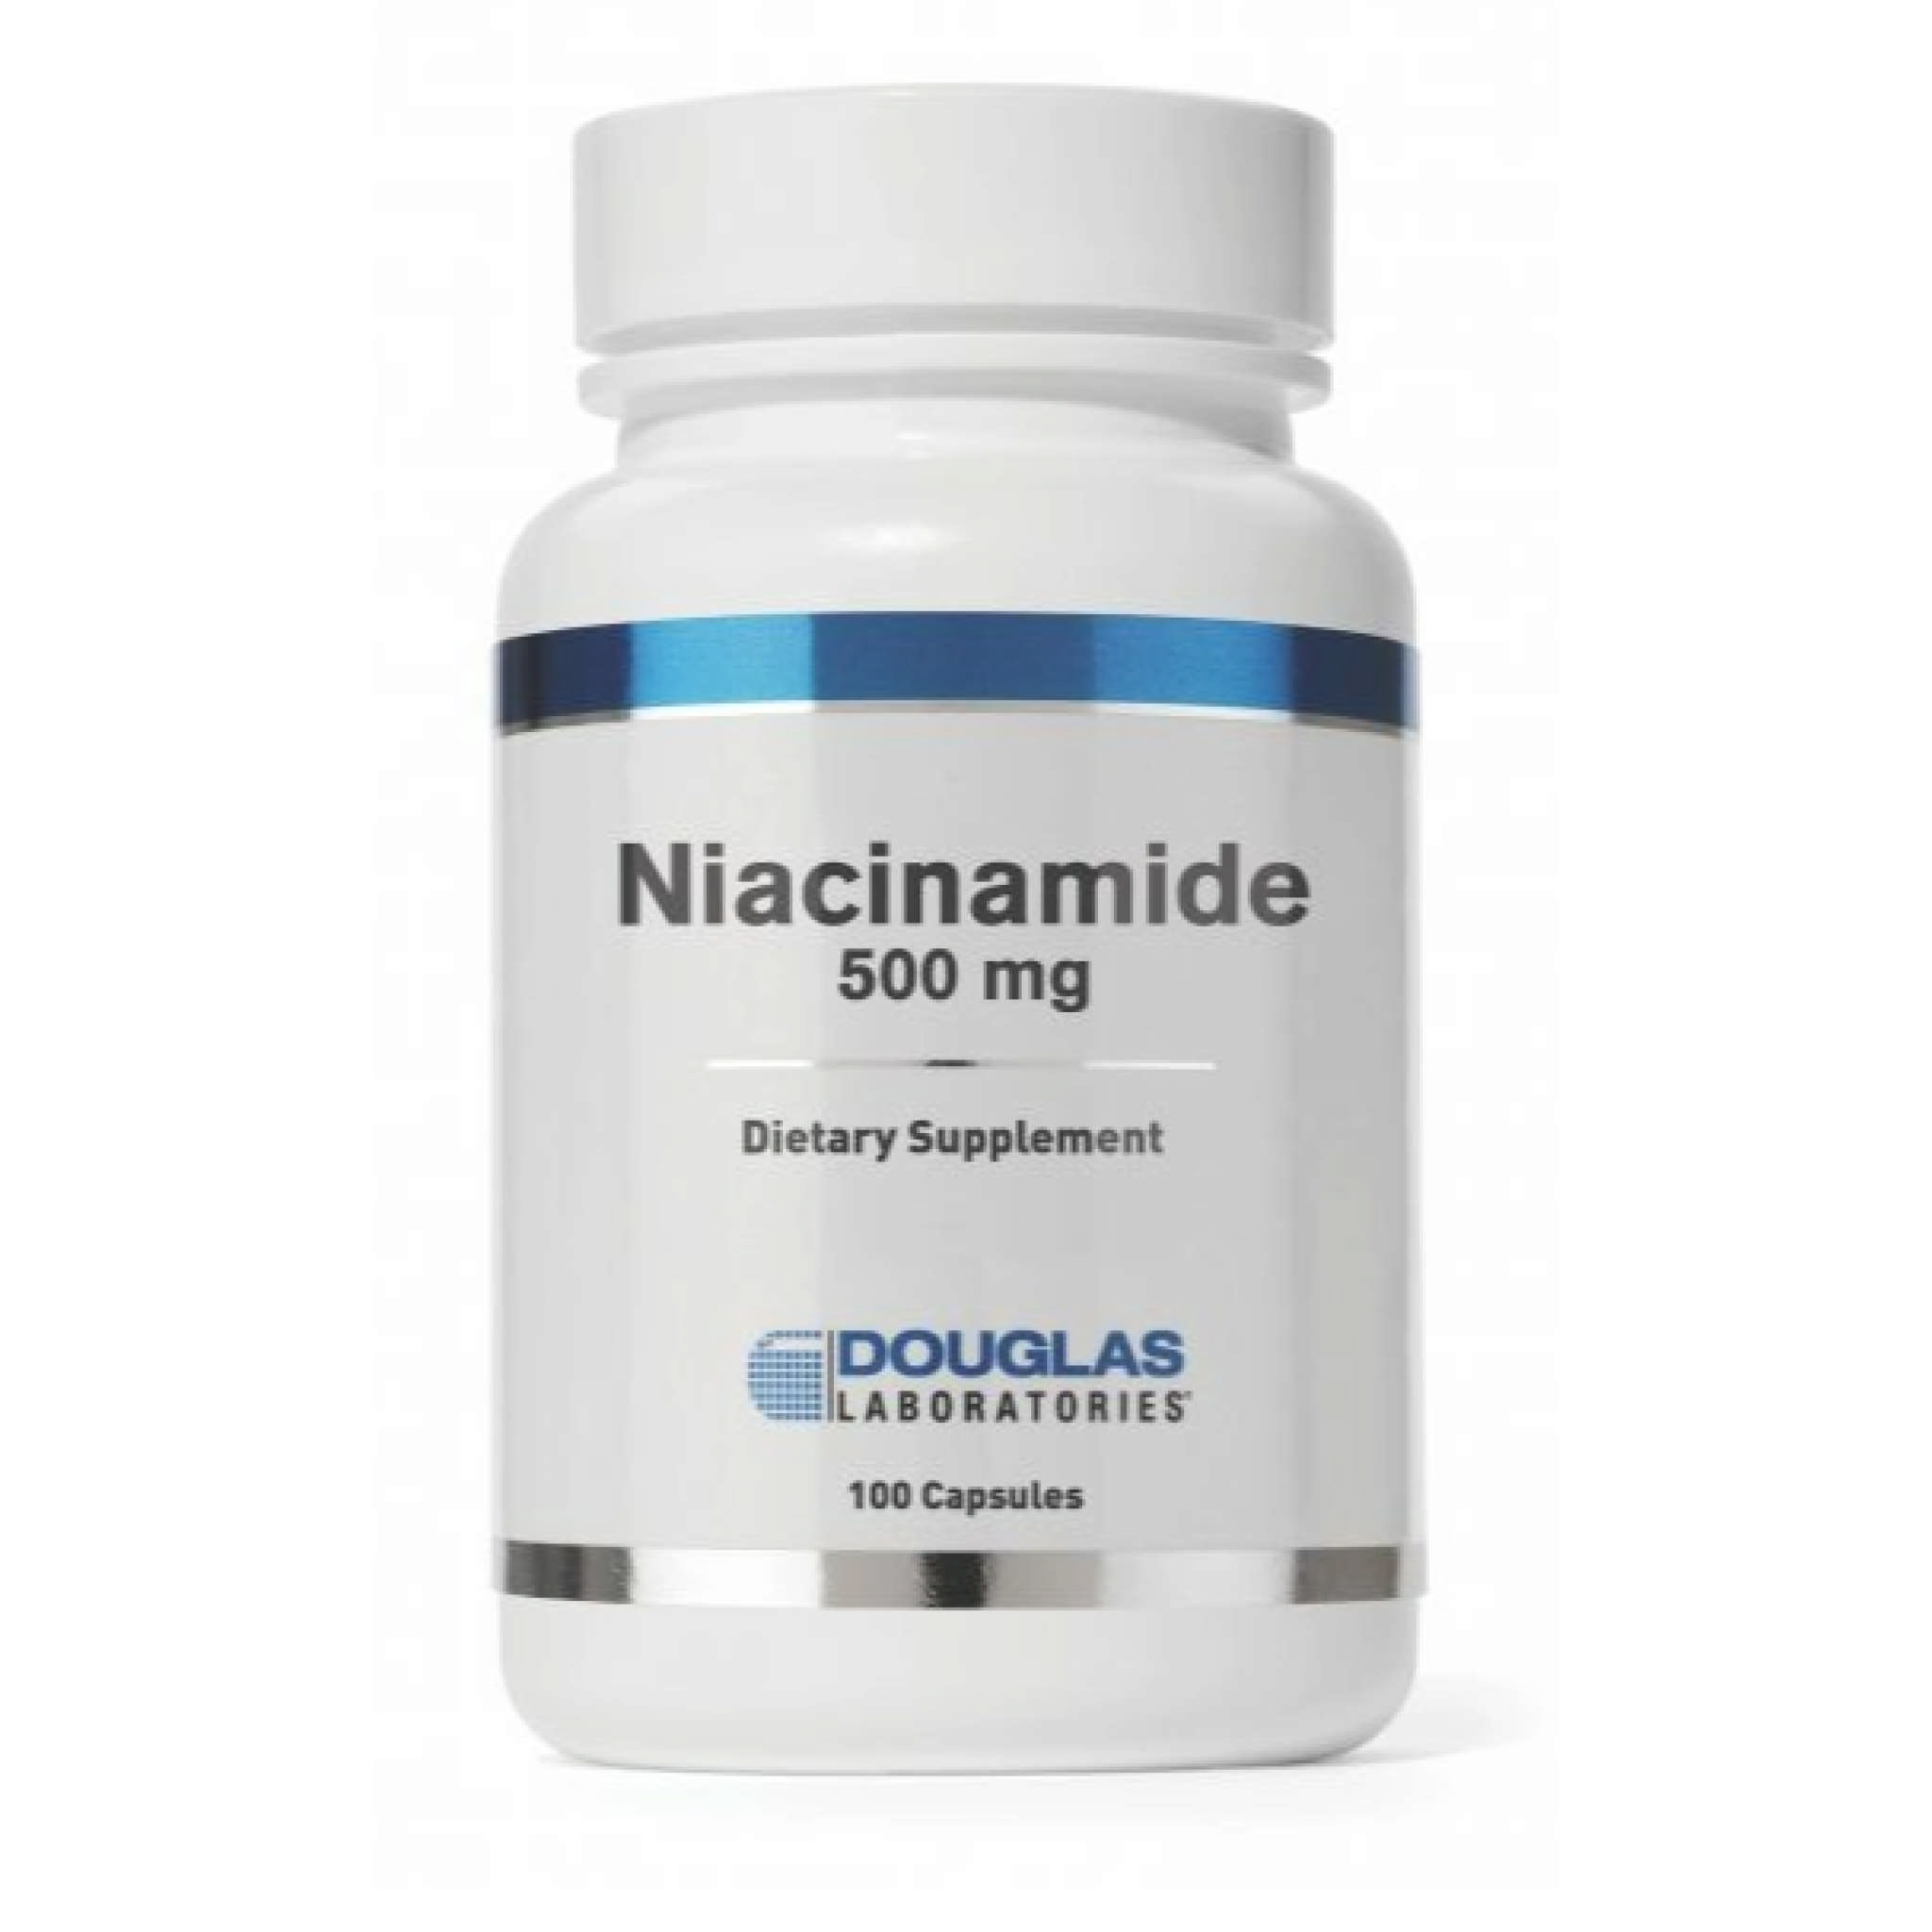 Douglas Laboratories - Niacinamide 500 mg